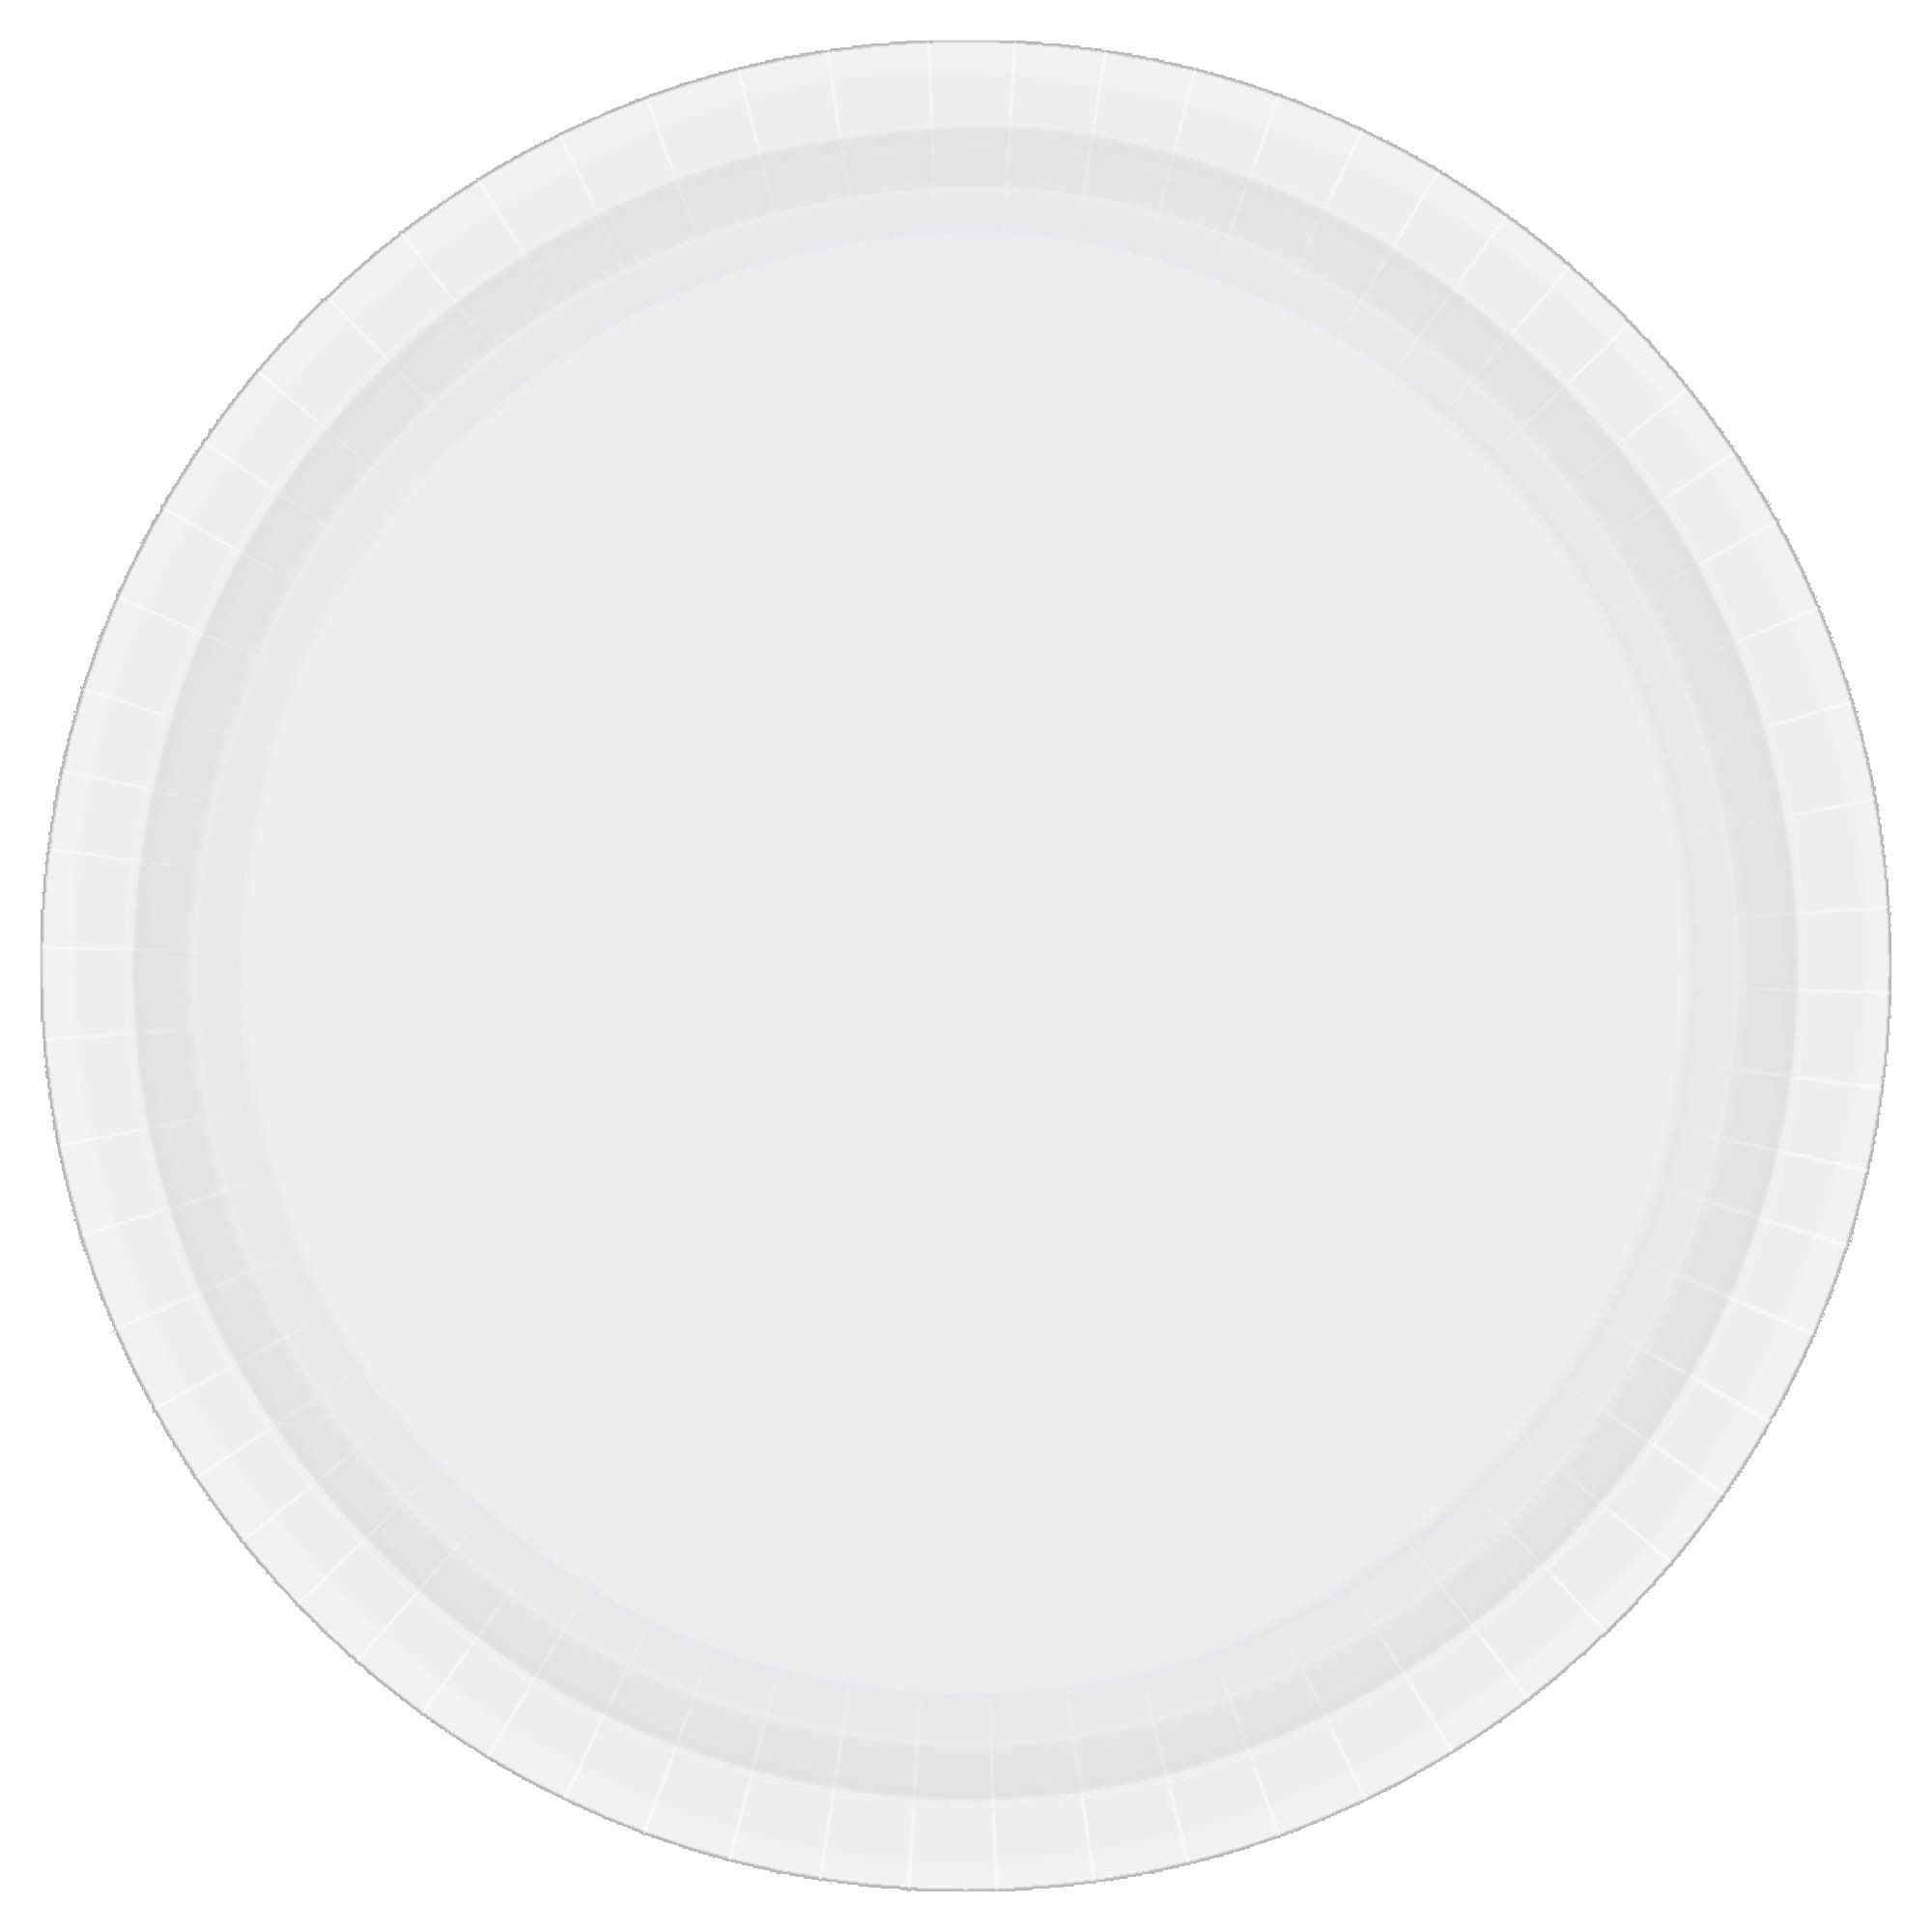 6 3/4" Round Paper Plates - White 20CT